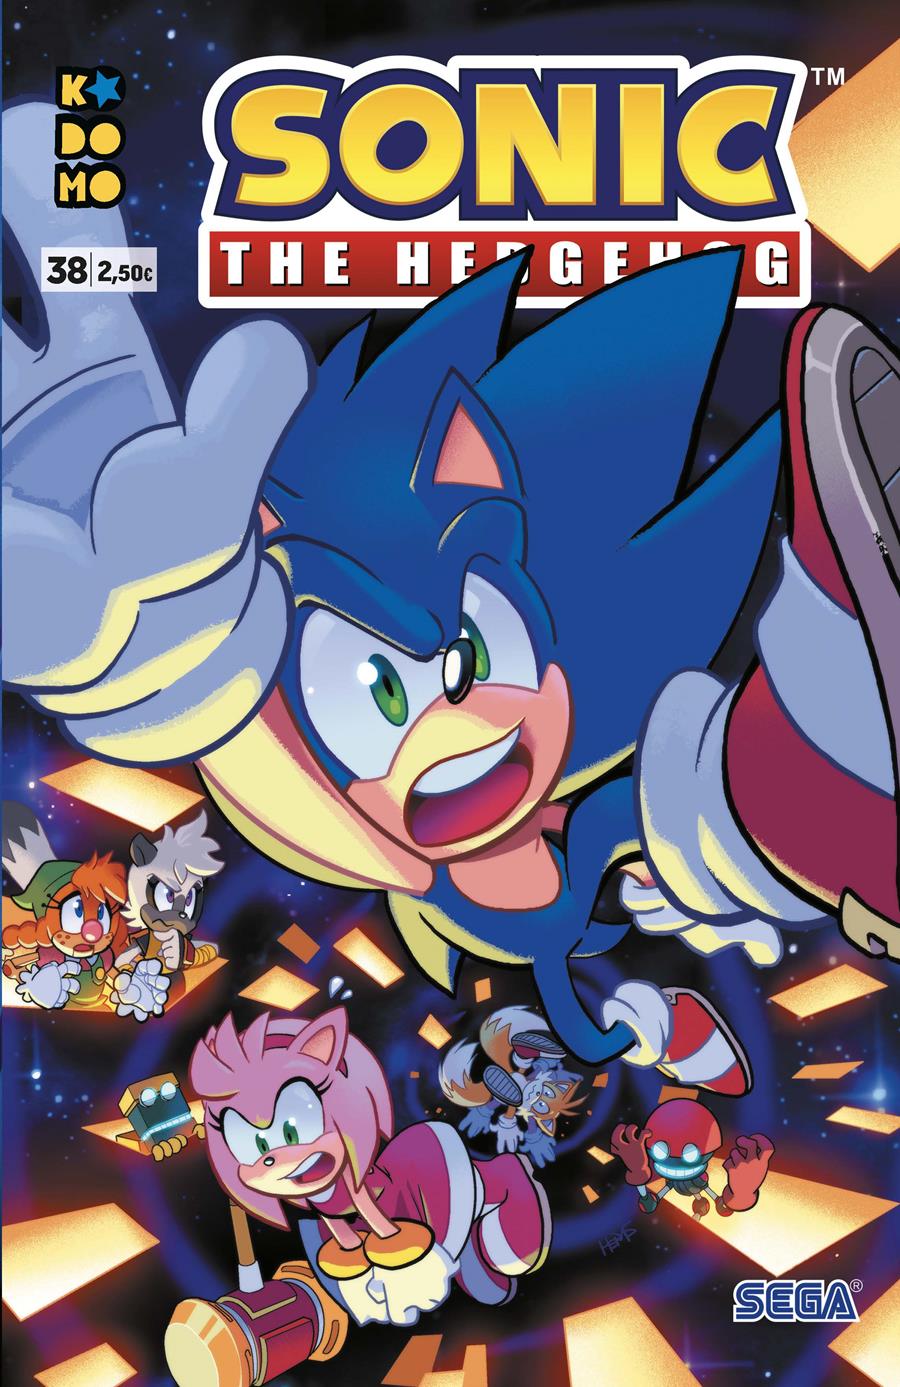 Sonic The Hedgehog núm. 38 | N0922-ECC58 | Bracardy Curry / Evan Stanley / Evan Stanley | Terra de Còmic - Tu tienda de cómics online especializada en cómics, manga y merchandising